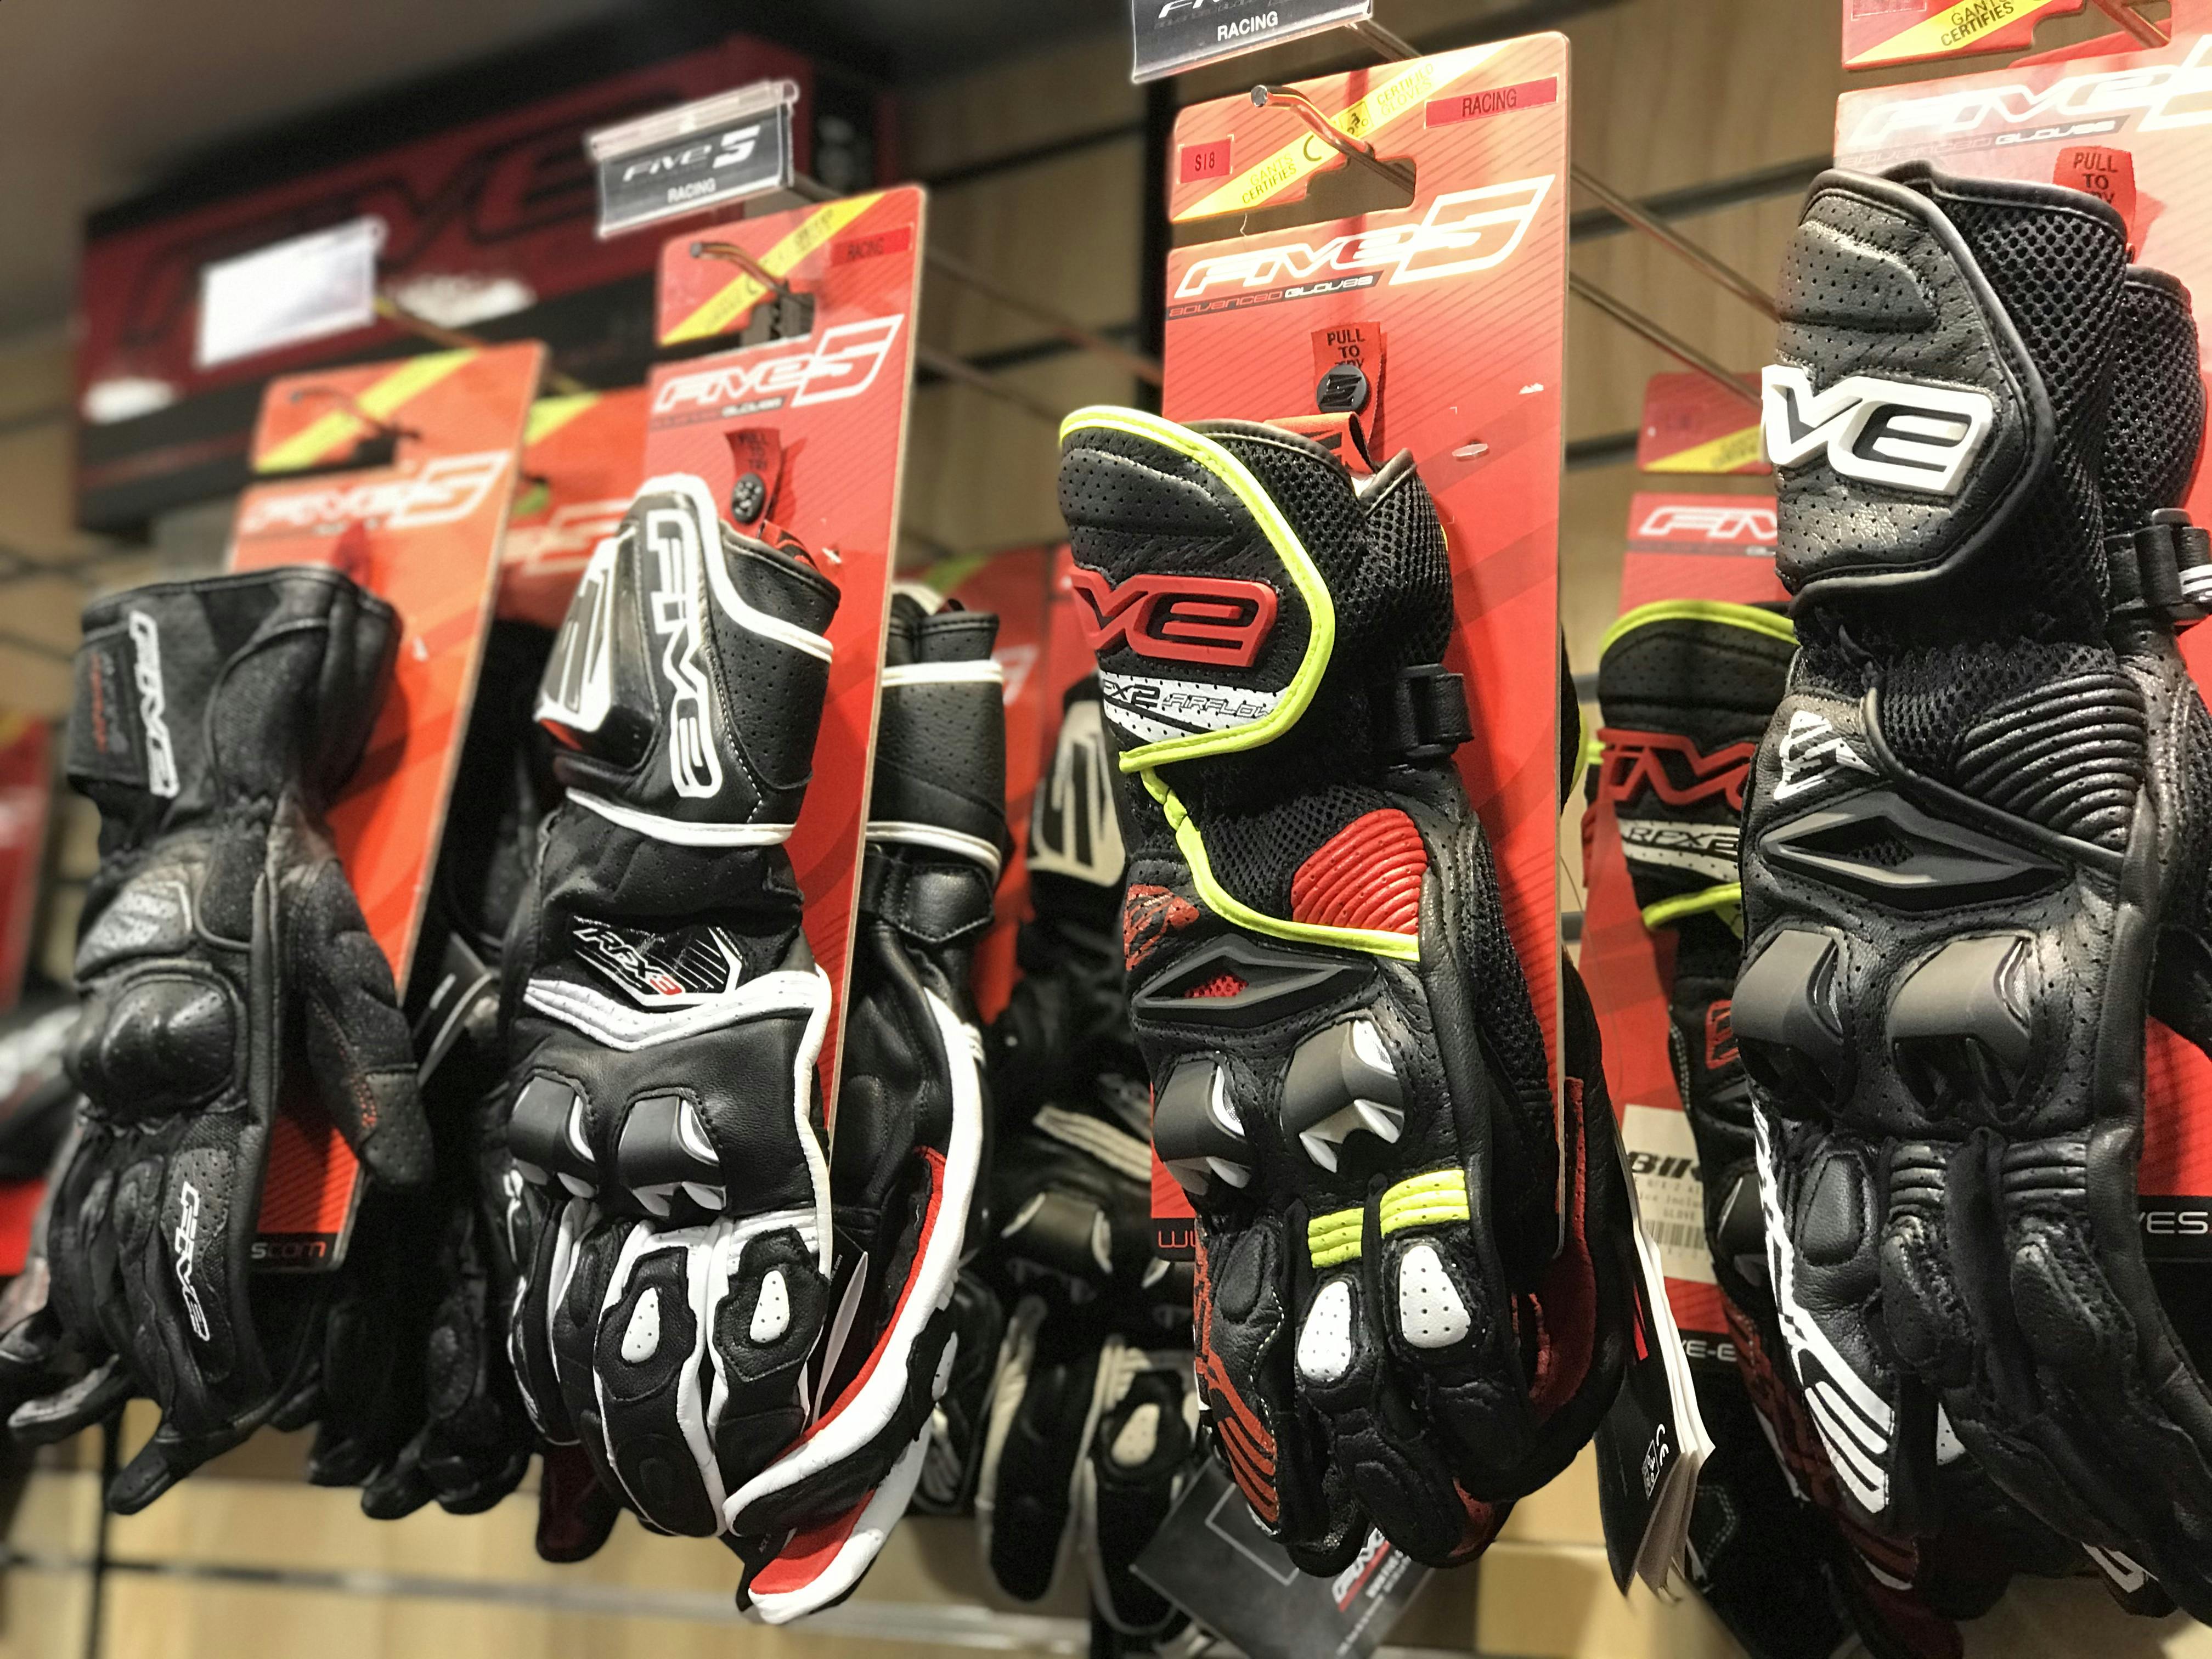 Five vented race gloves - RFX-2 Airflow in store at Bikebiz